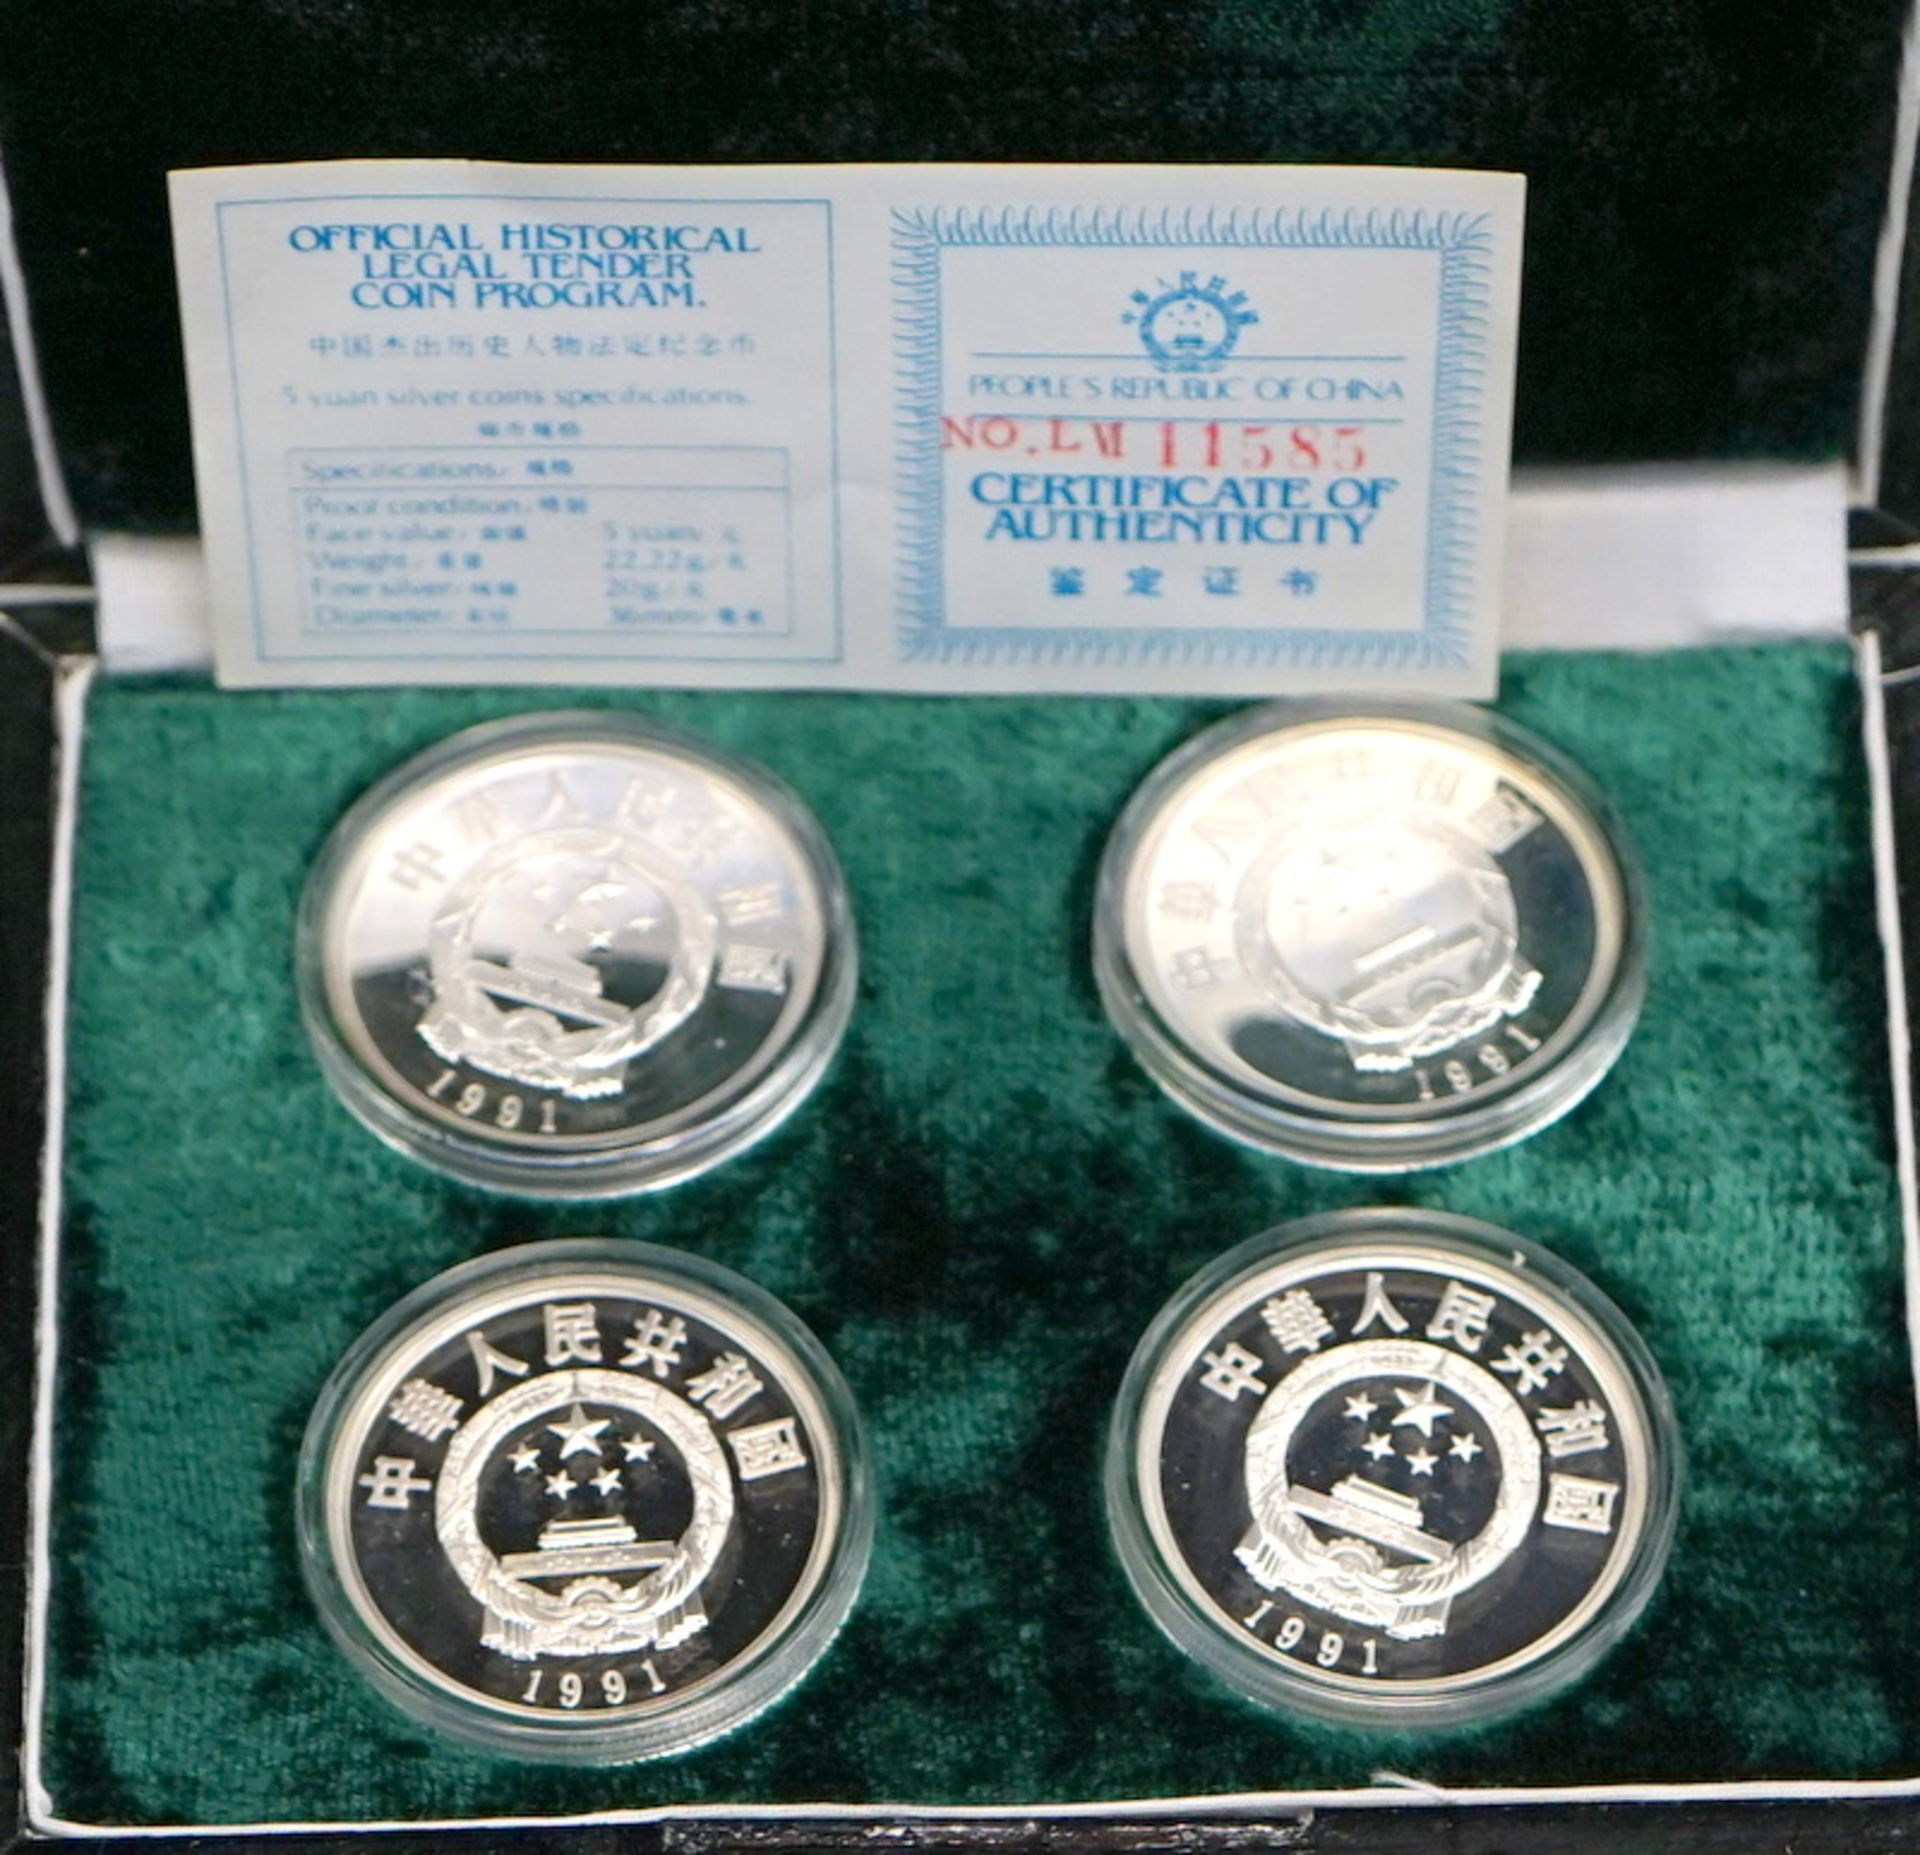 12 Münzen, Silber, China, 5 Yuan, 1984, 1991, 1993,jeweils 4x 1984, 1991, 1993, 5 Yuan, - Image 2 of 2